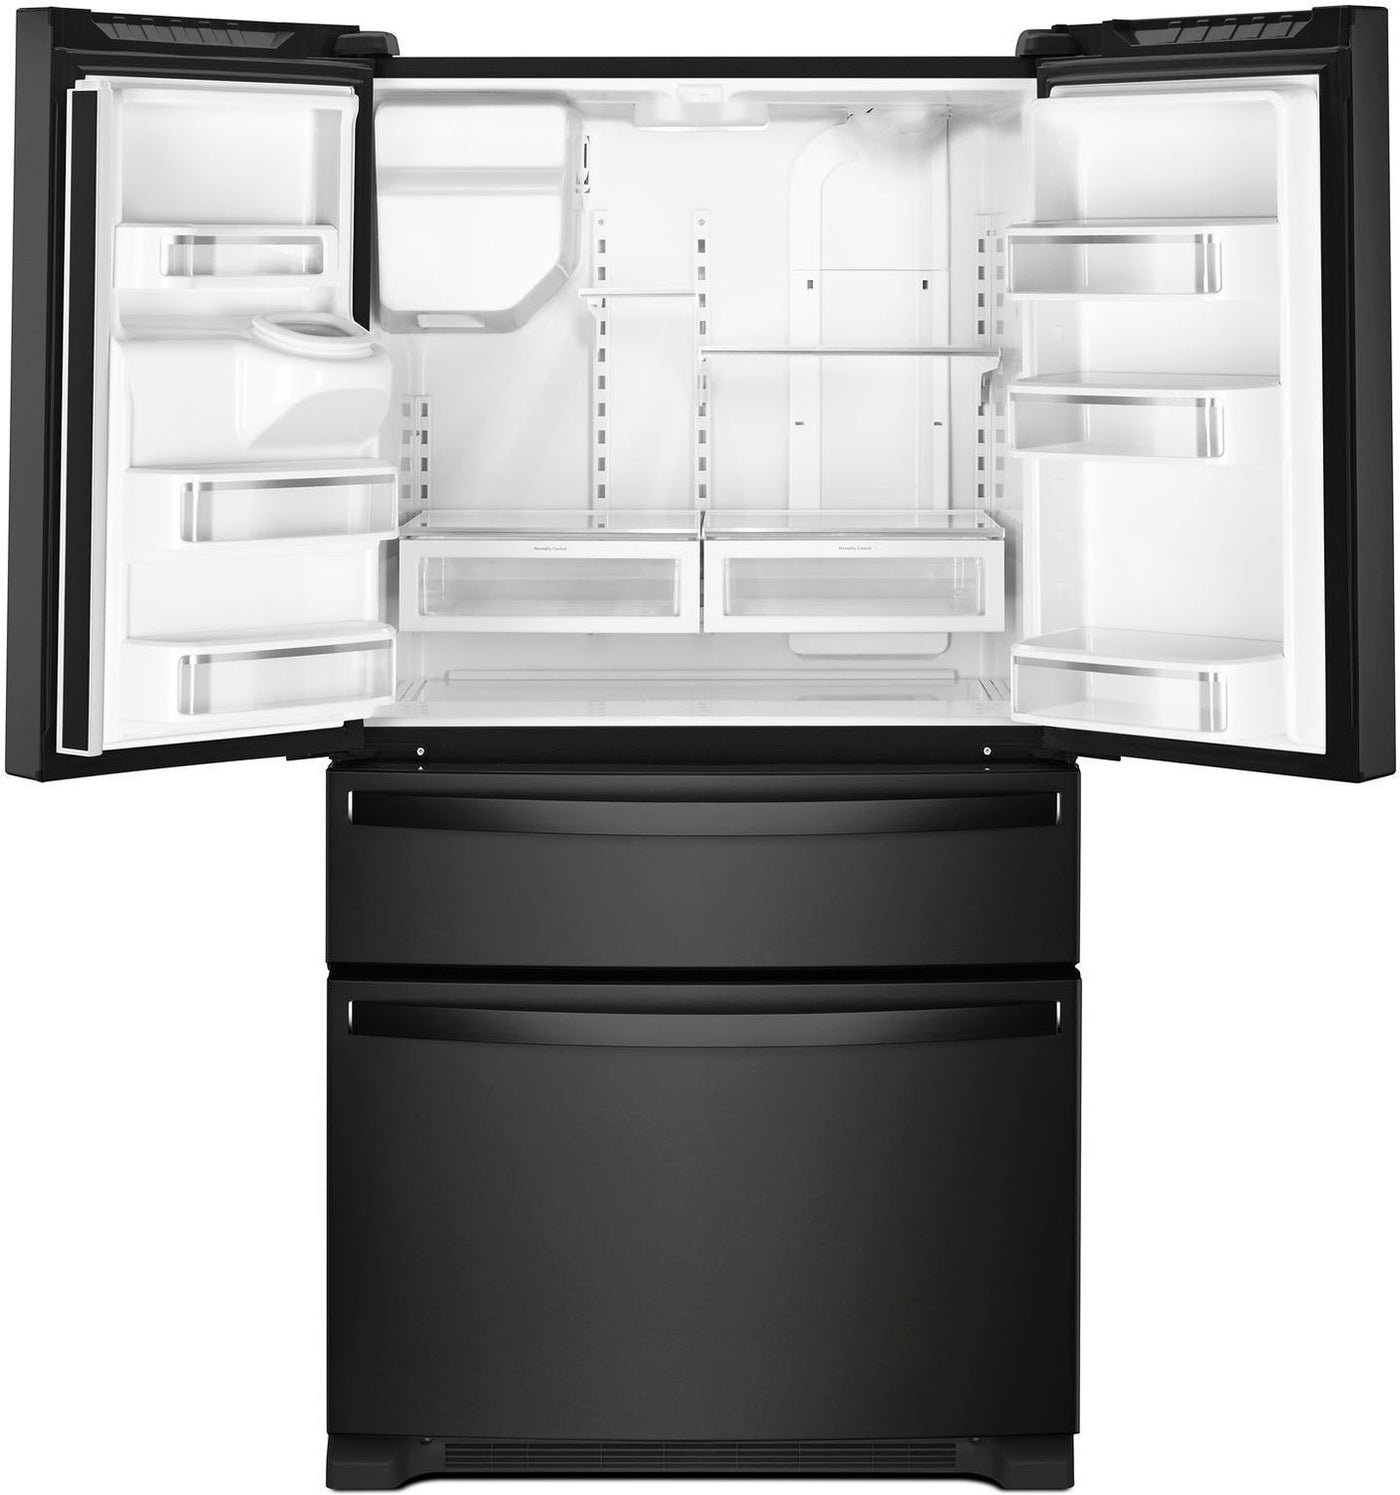 Whirlpool Black French Door Refrigerator (25 Cu. Ft.) - WRX735SDHB